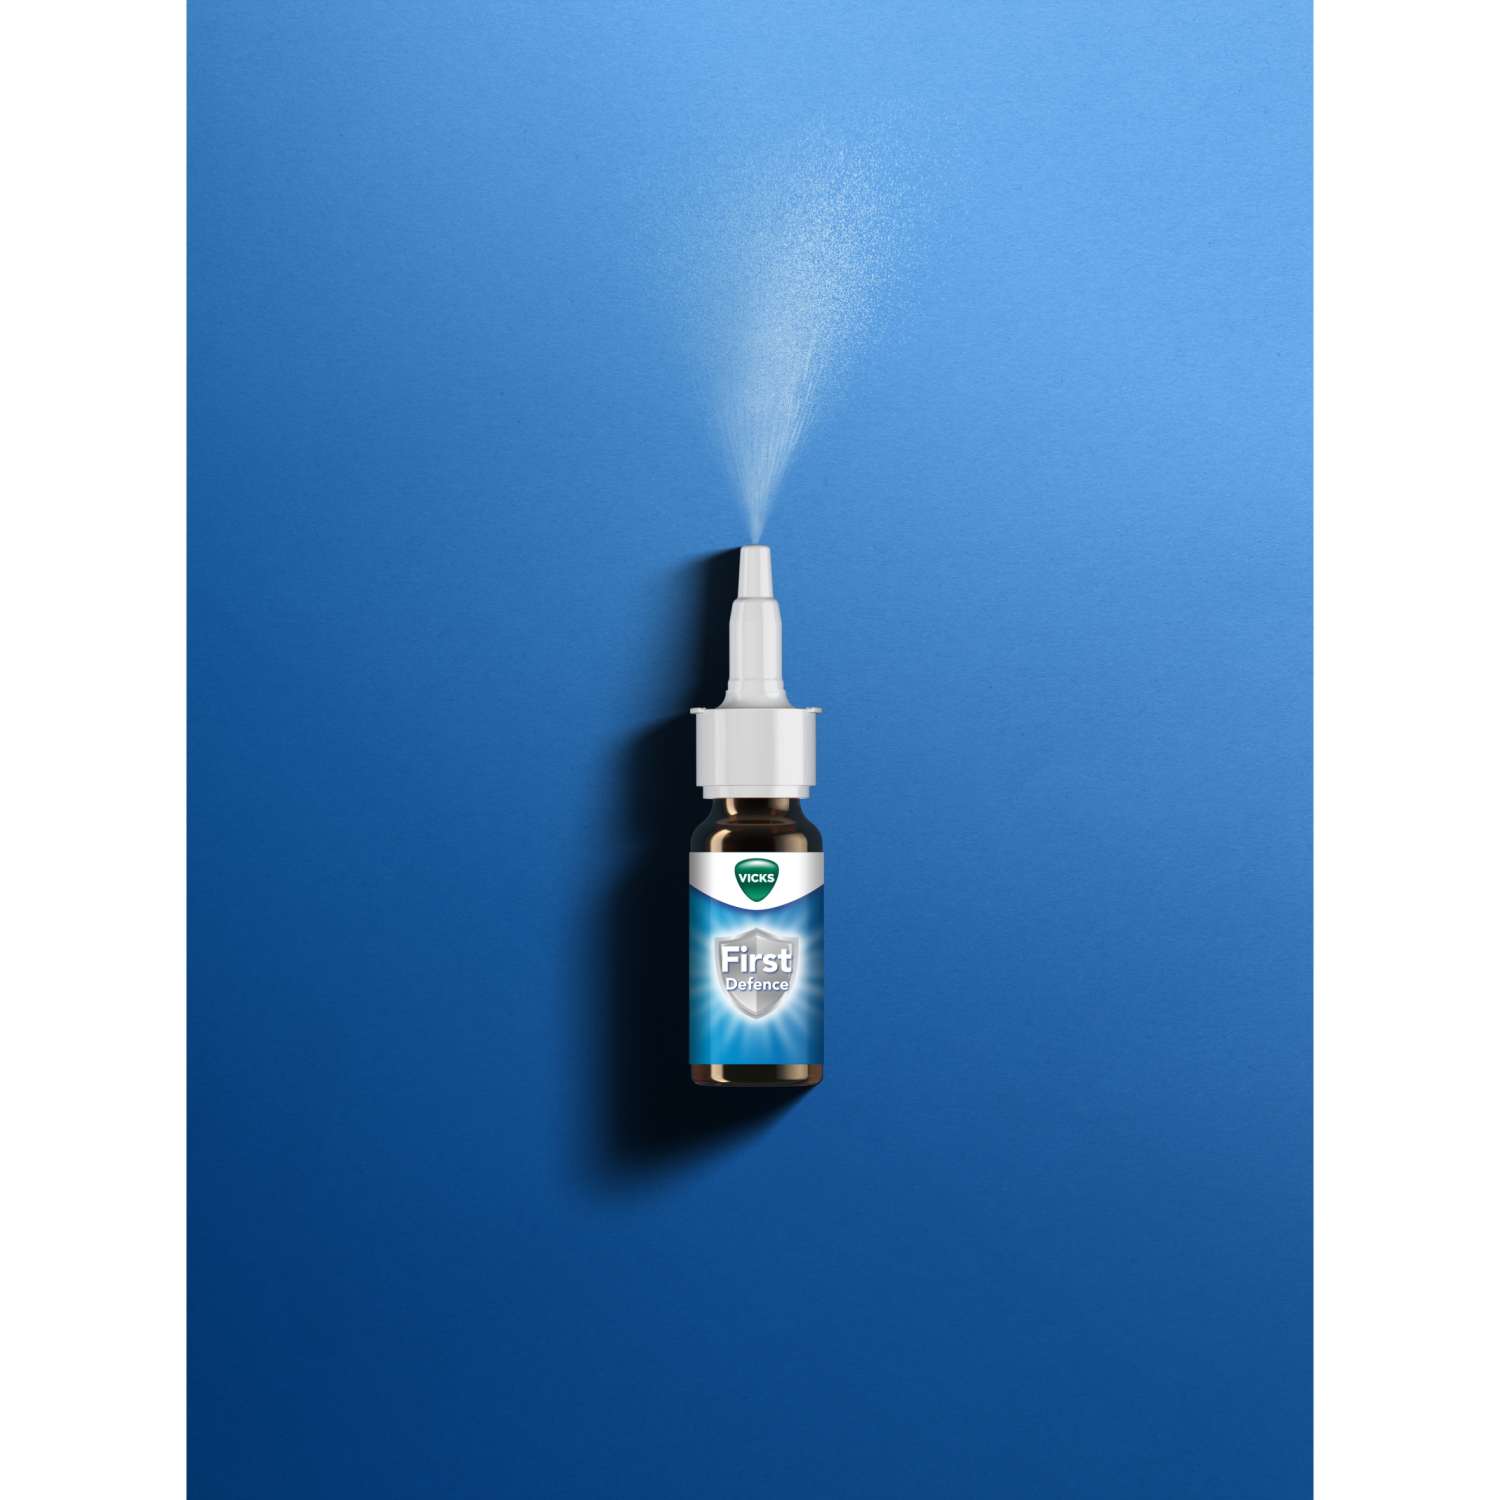 Vicks First Defence Cold Virus Blocker Nasal Spray Bottle 15ml